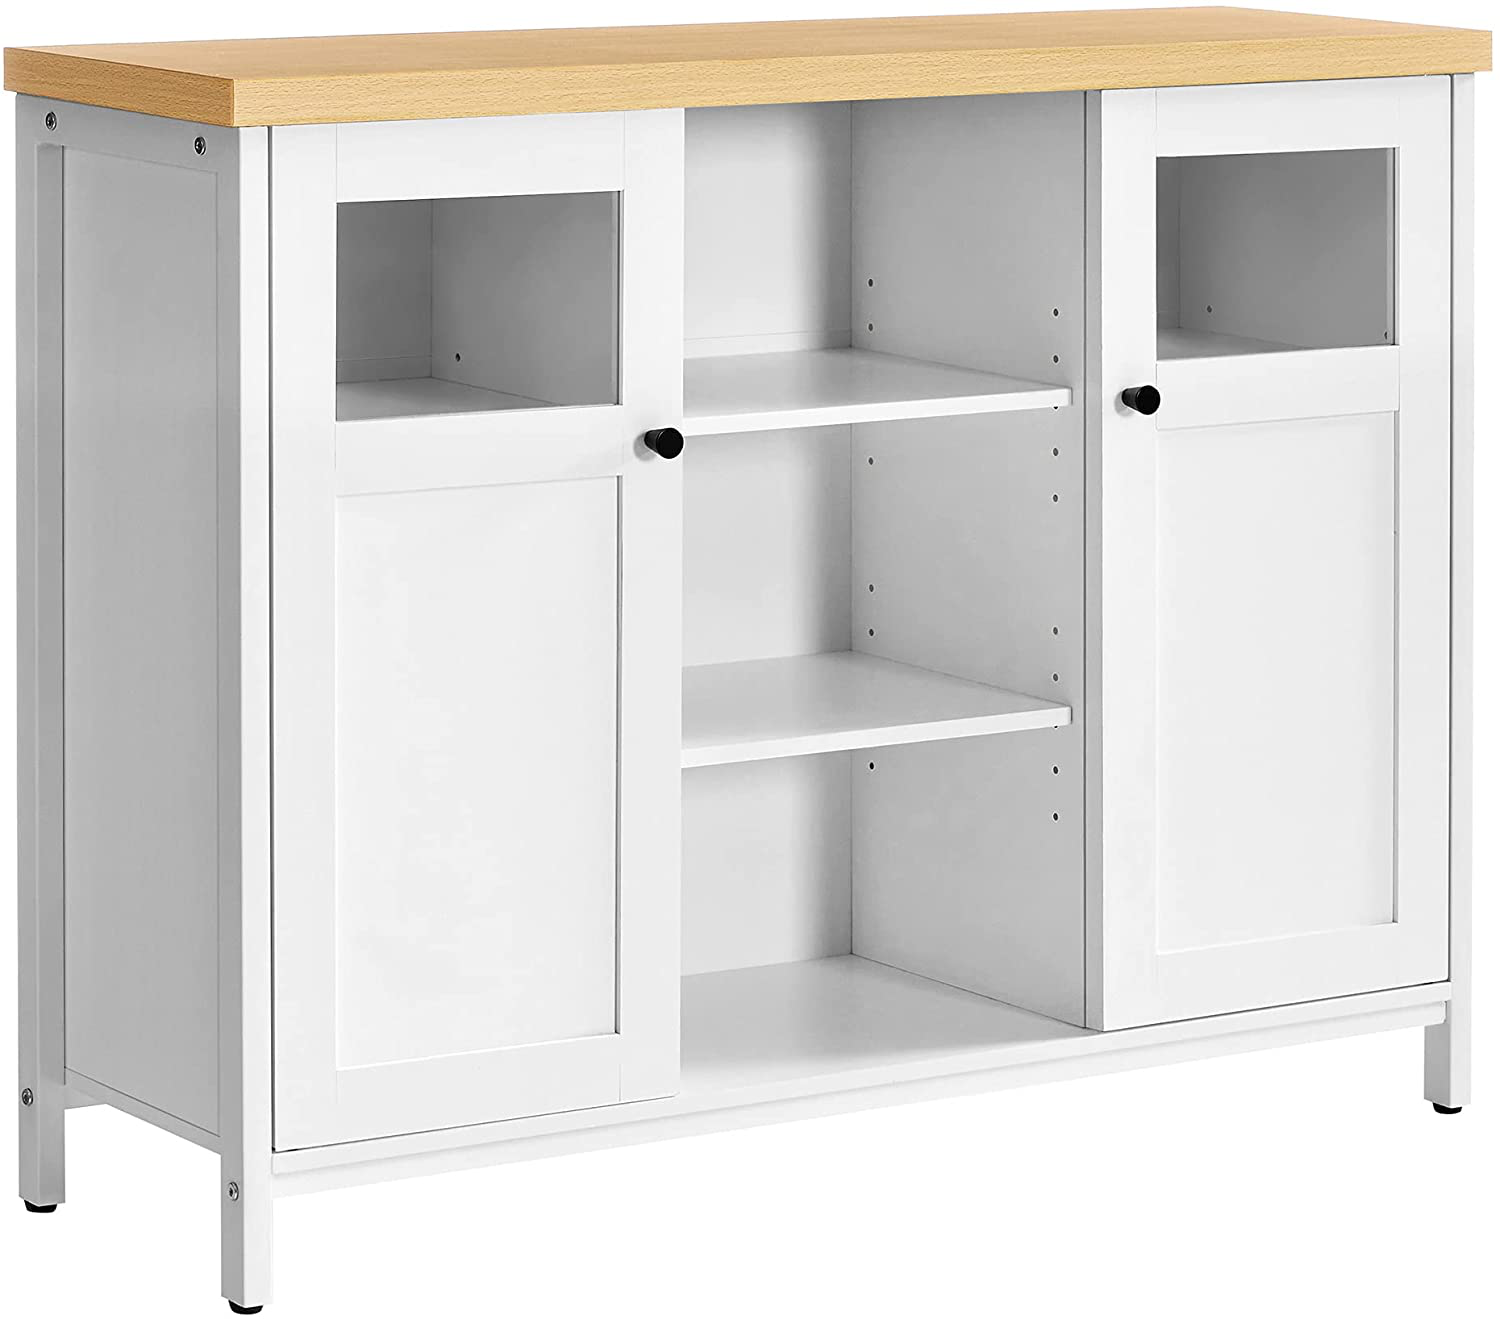 Lynton Sideboard, Kitchen Cupboard Storage Organiser